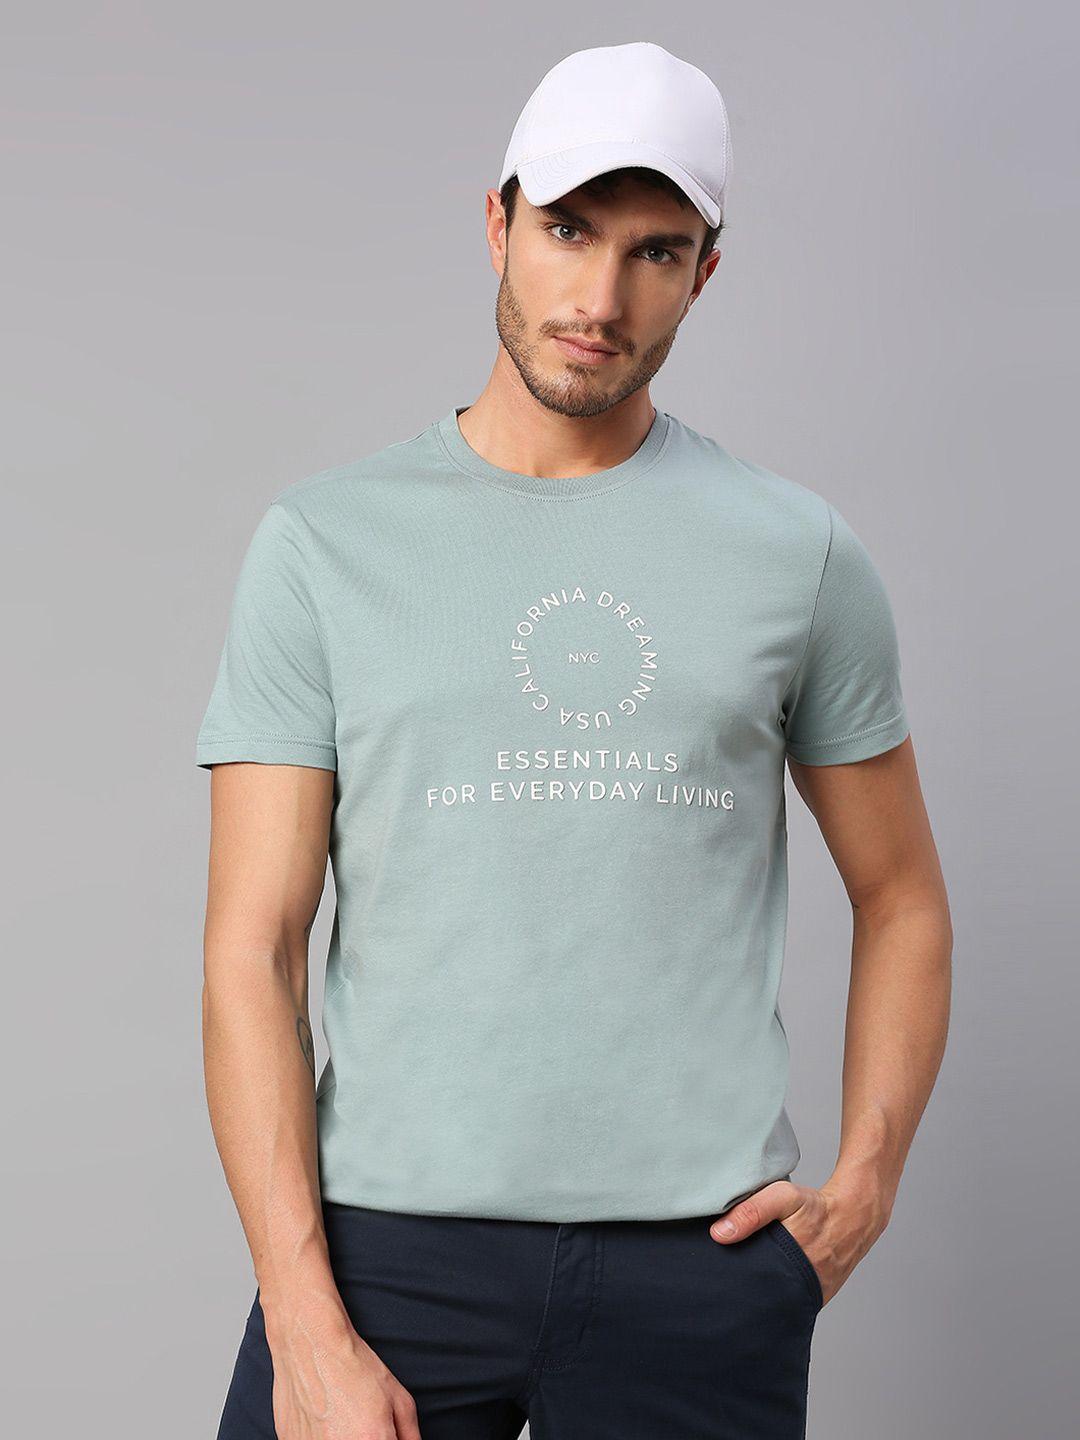 dennis-lingo-men-typography-printed-pure-cotton-t-shirt